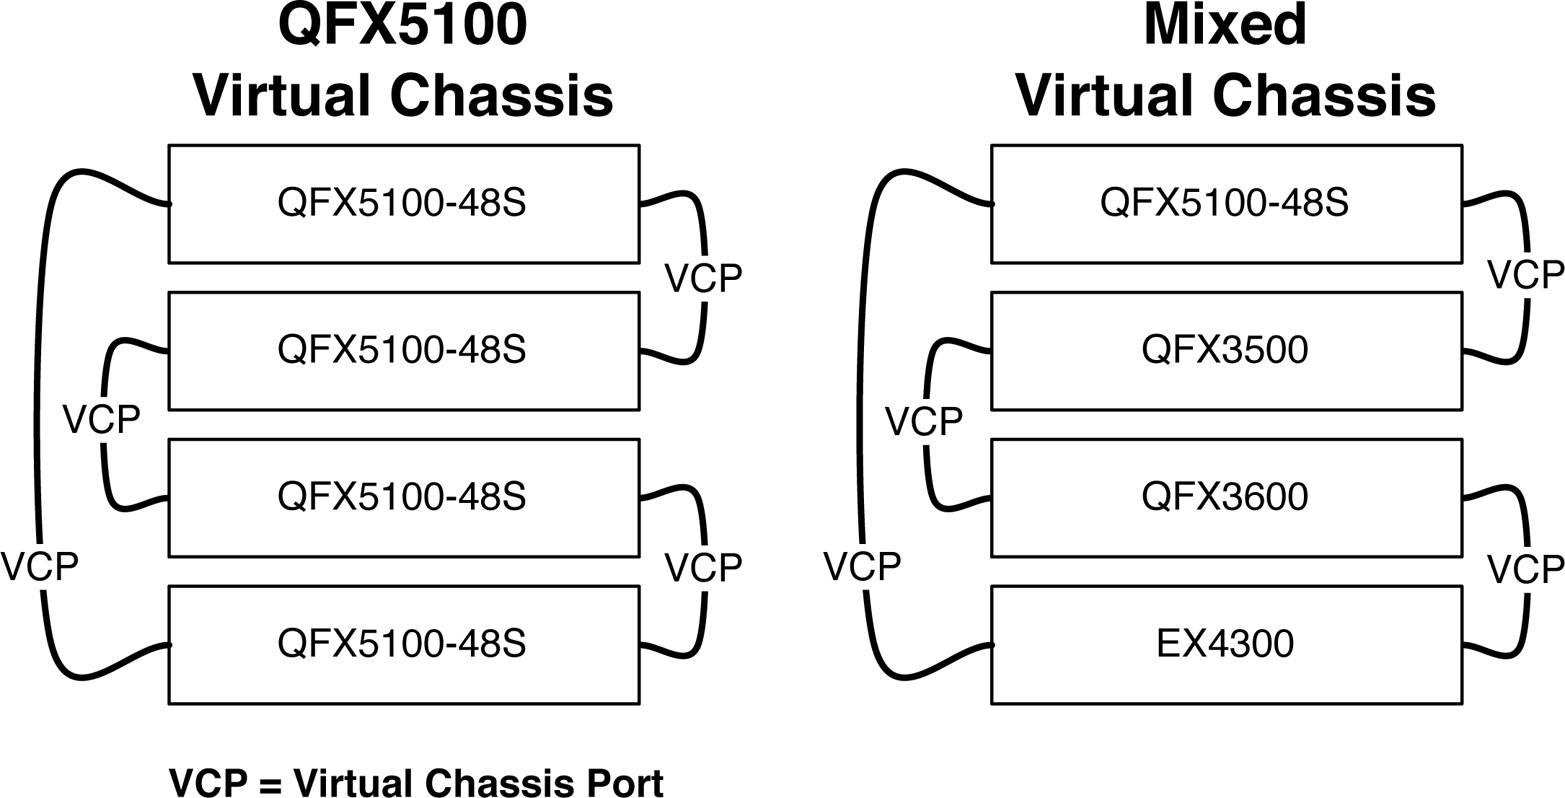 QFX5100 Virtual Chassis and mixed Virtual Chassis